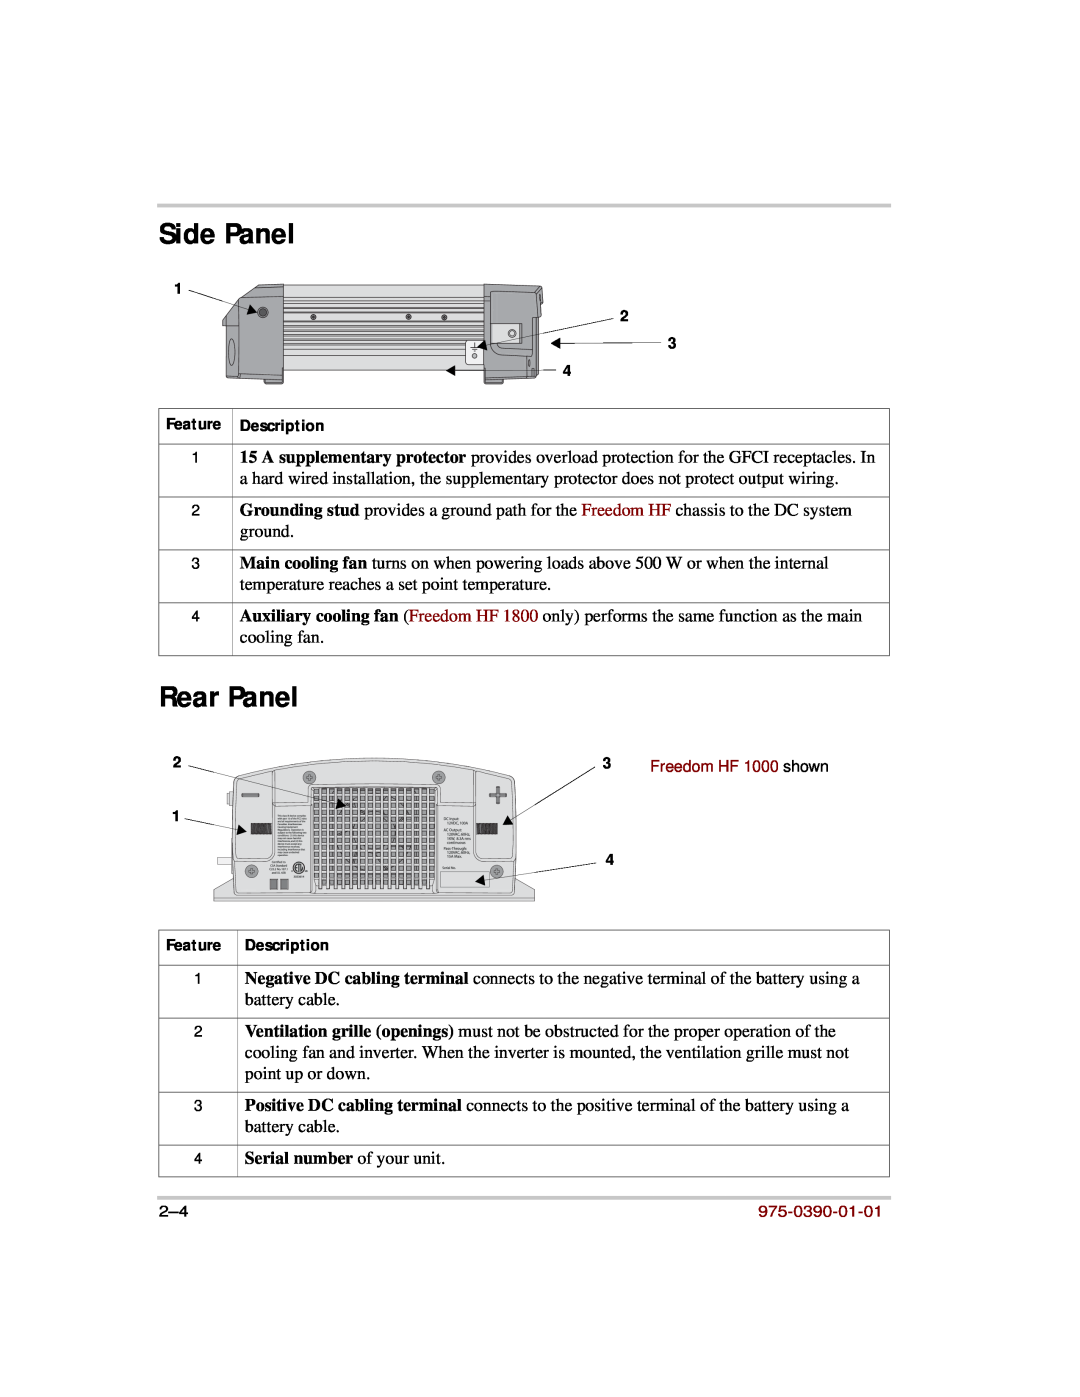 Xantrex Technology HF 1000, HF 1800 manual Side Panel, Rear Panel, Feature Description, 975-0390-01-01 